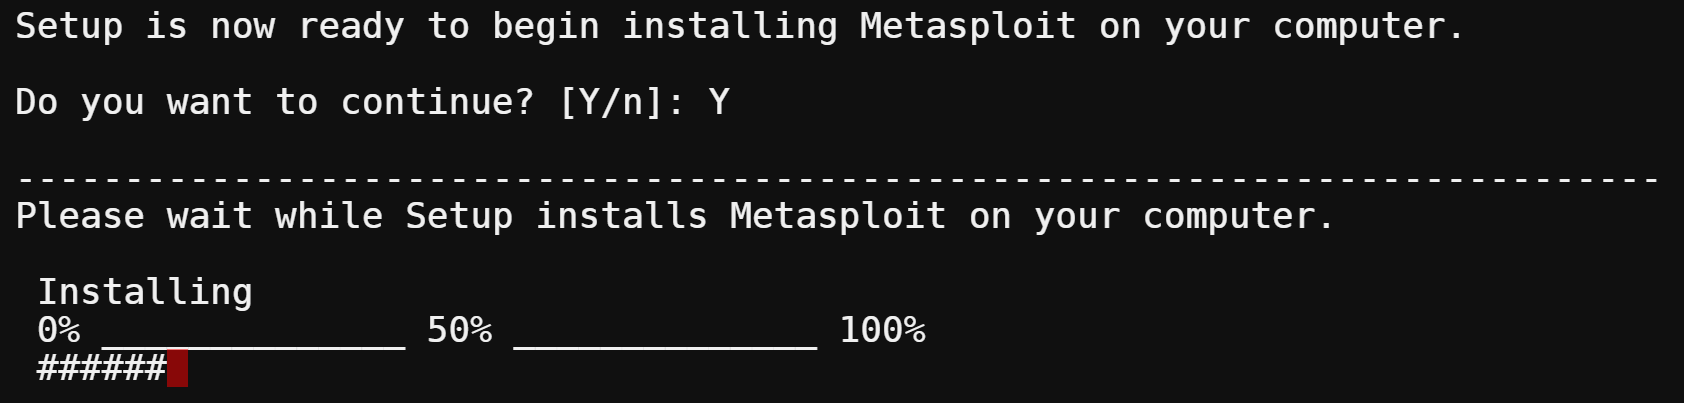 Starting the Metasploit installation process.